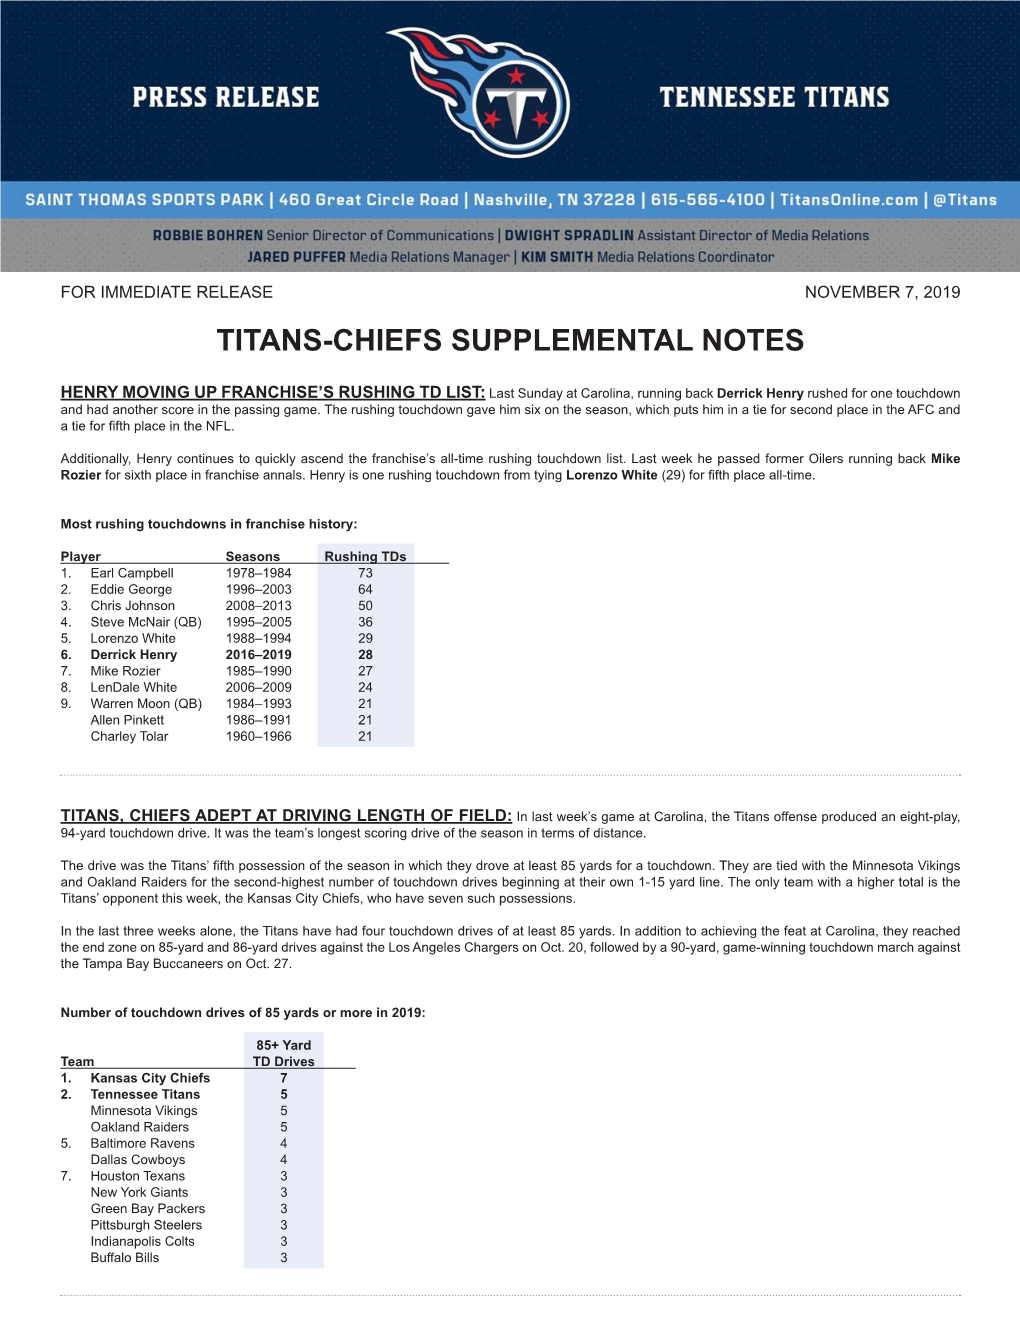 Titans-Chiefs Supplemental Notes